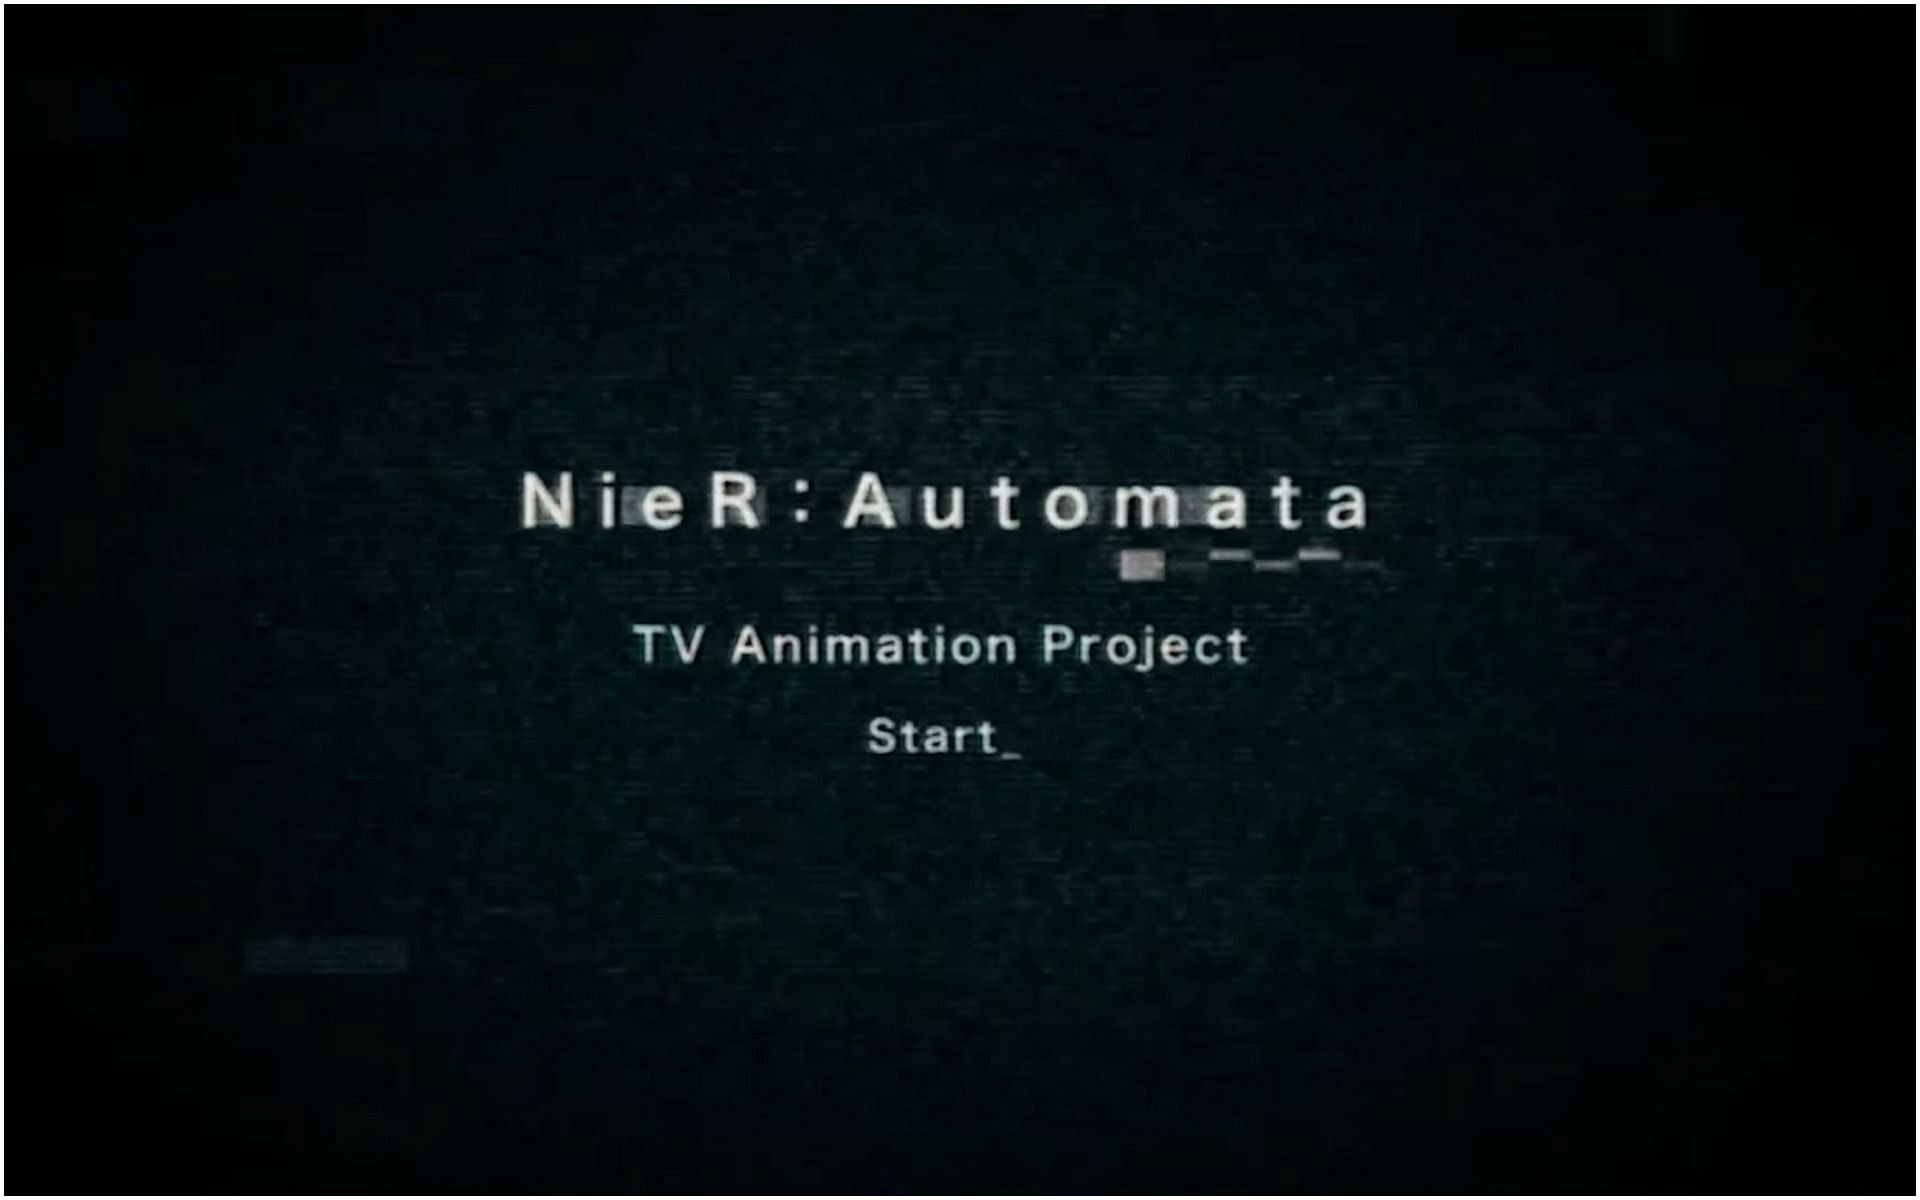 NieR Automata Anime Announced From Sword Art Online Studio